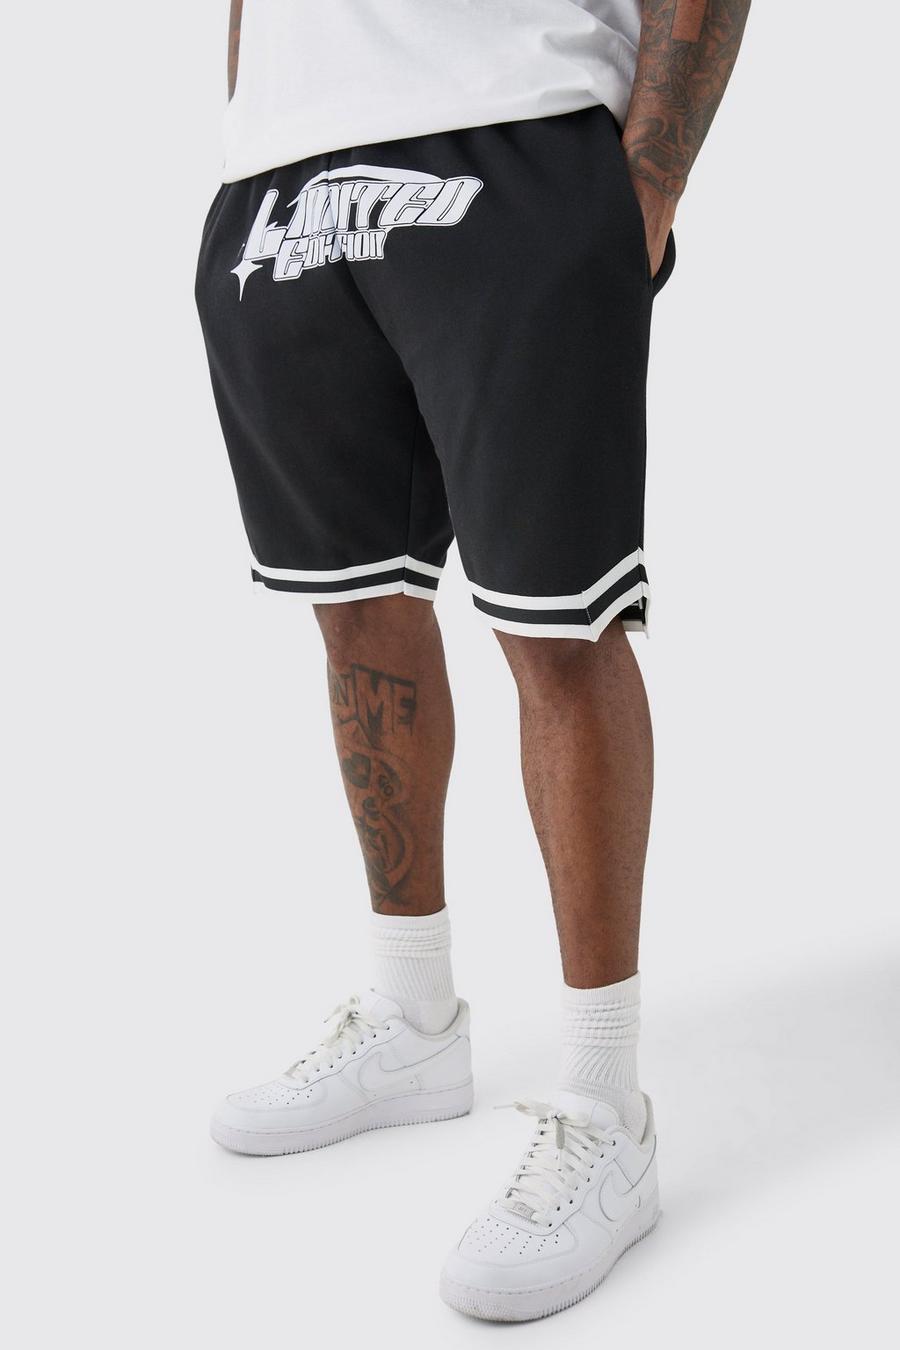 Plus lockere Limited Edition Basketball-Shorts in Schwarz, Black